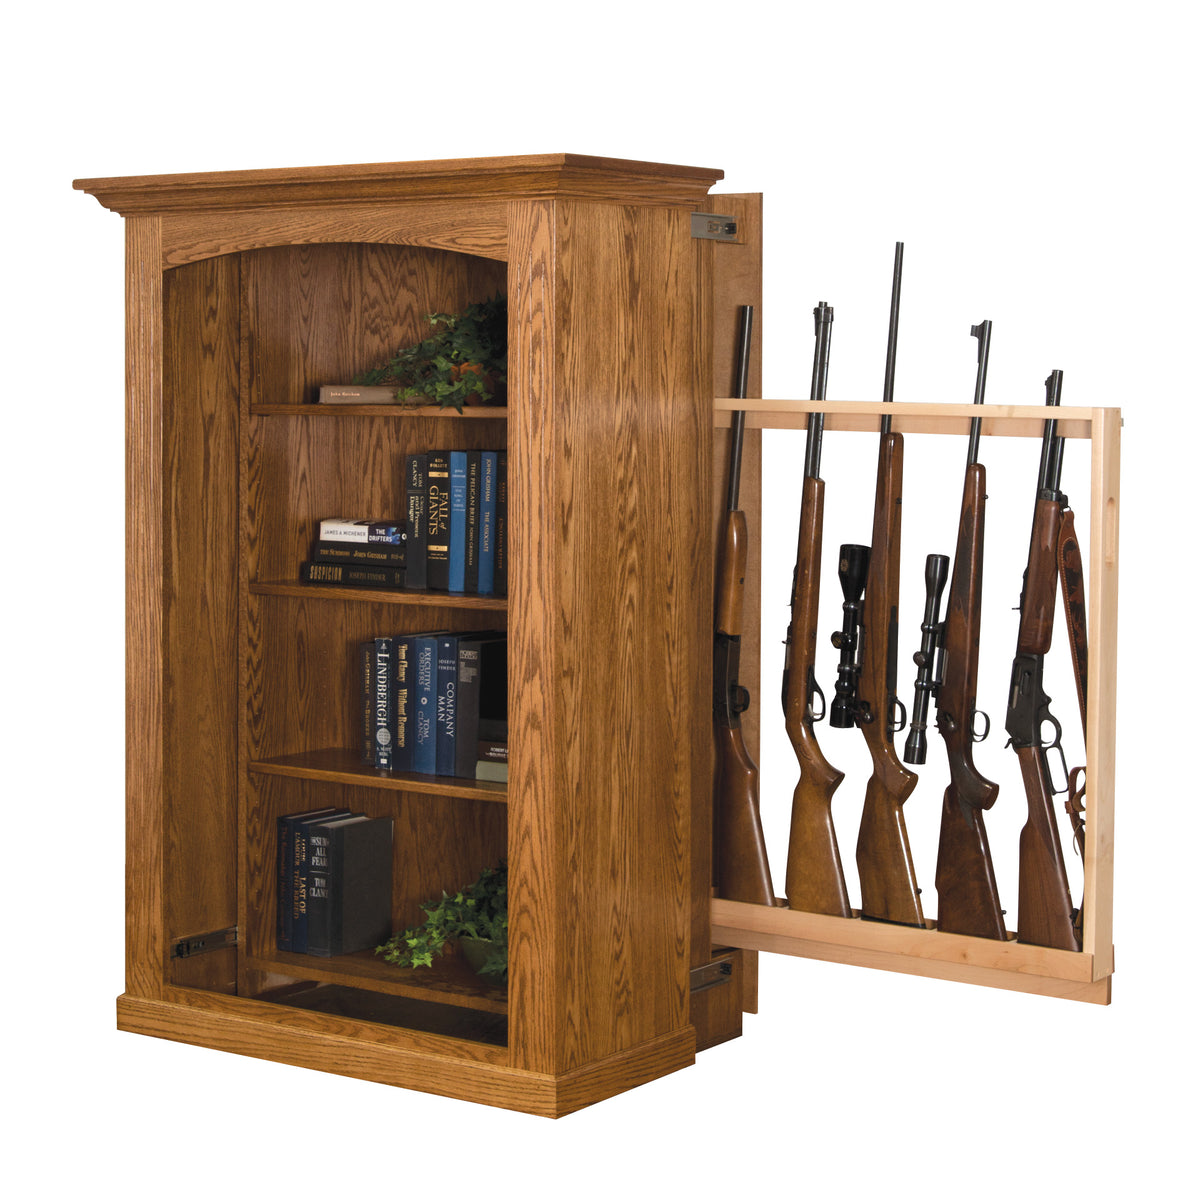 Winchester Bookcase with Hidden Gun Storage From Dutchcrafters Amish